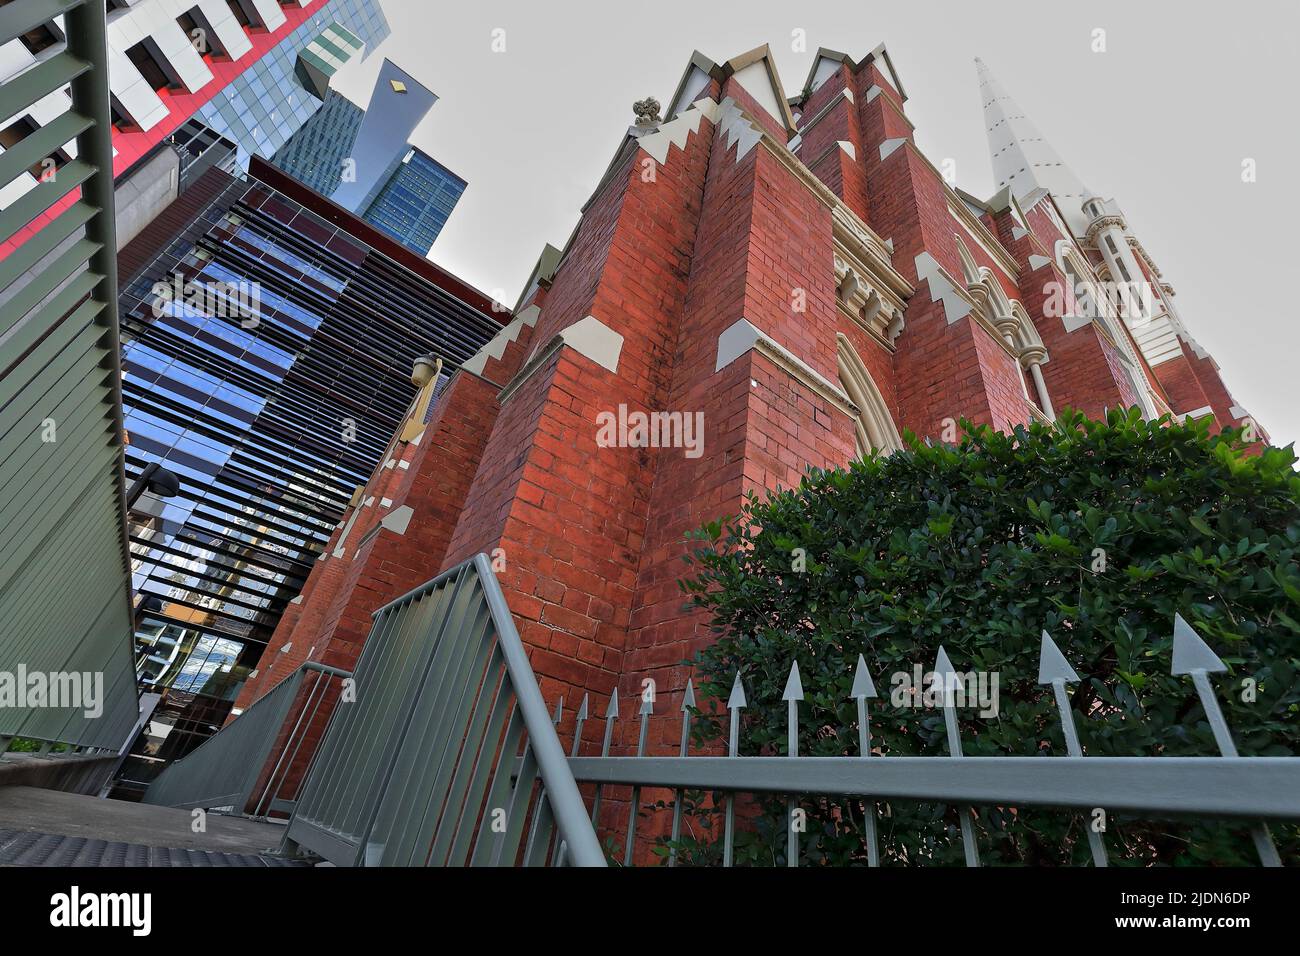 Methodist Albert Street Uniting Church on the Albert and Ann streets corner. Brisbane-Australia-002 Stock Photo